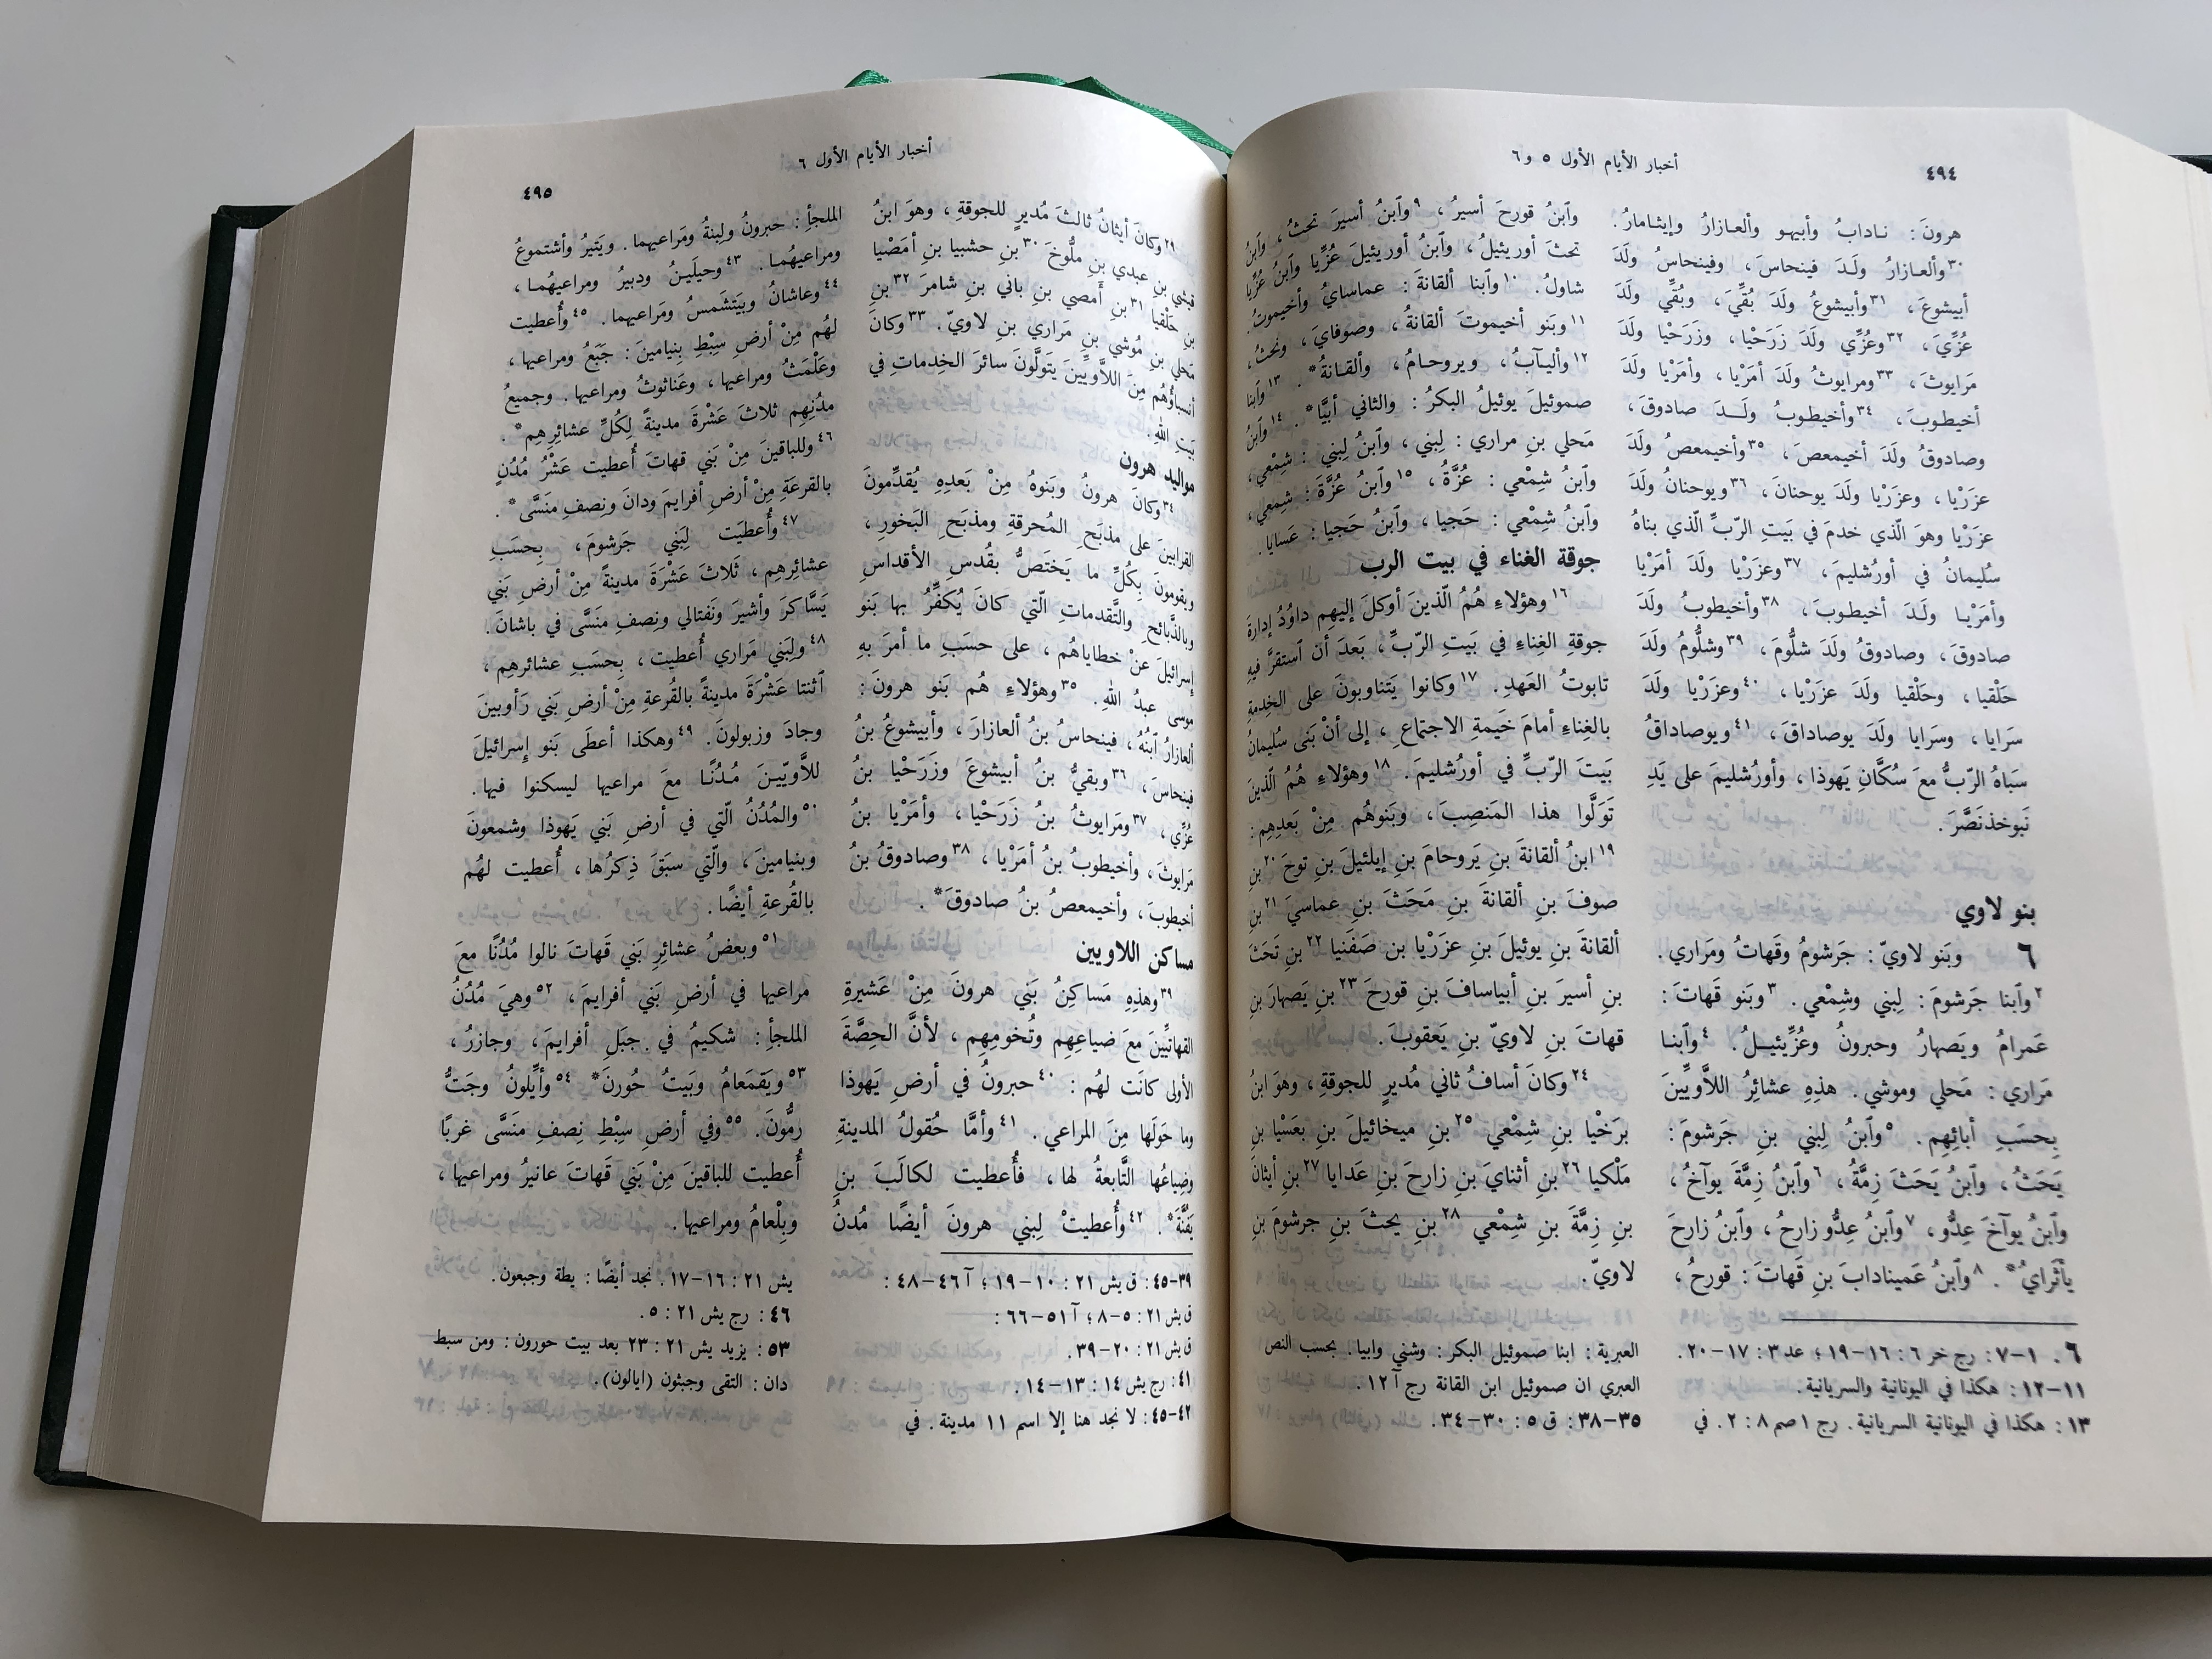 arabic-bible-gna-083-green-large-bible-with-large-print-hardcover-1999-lebanon-bible-society-12-.jpg